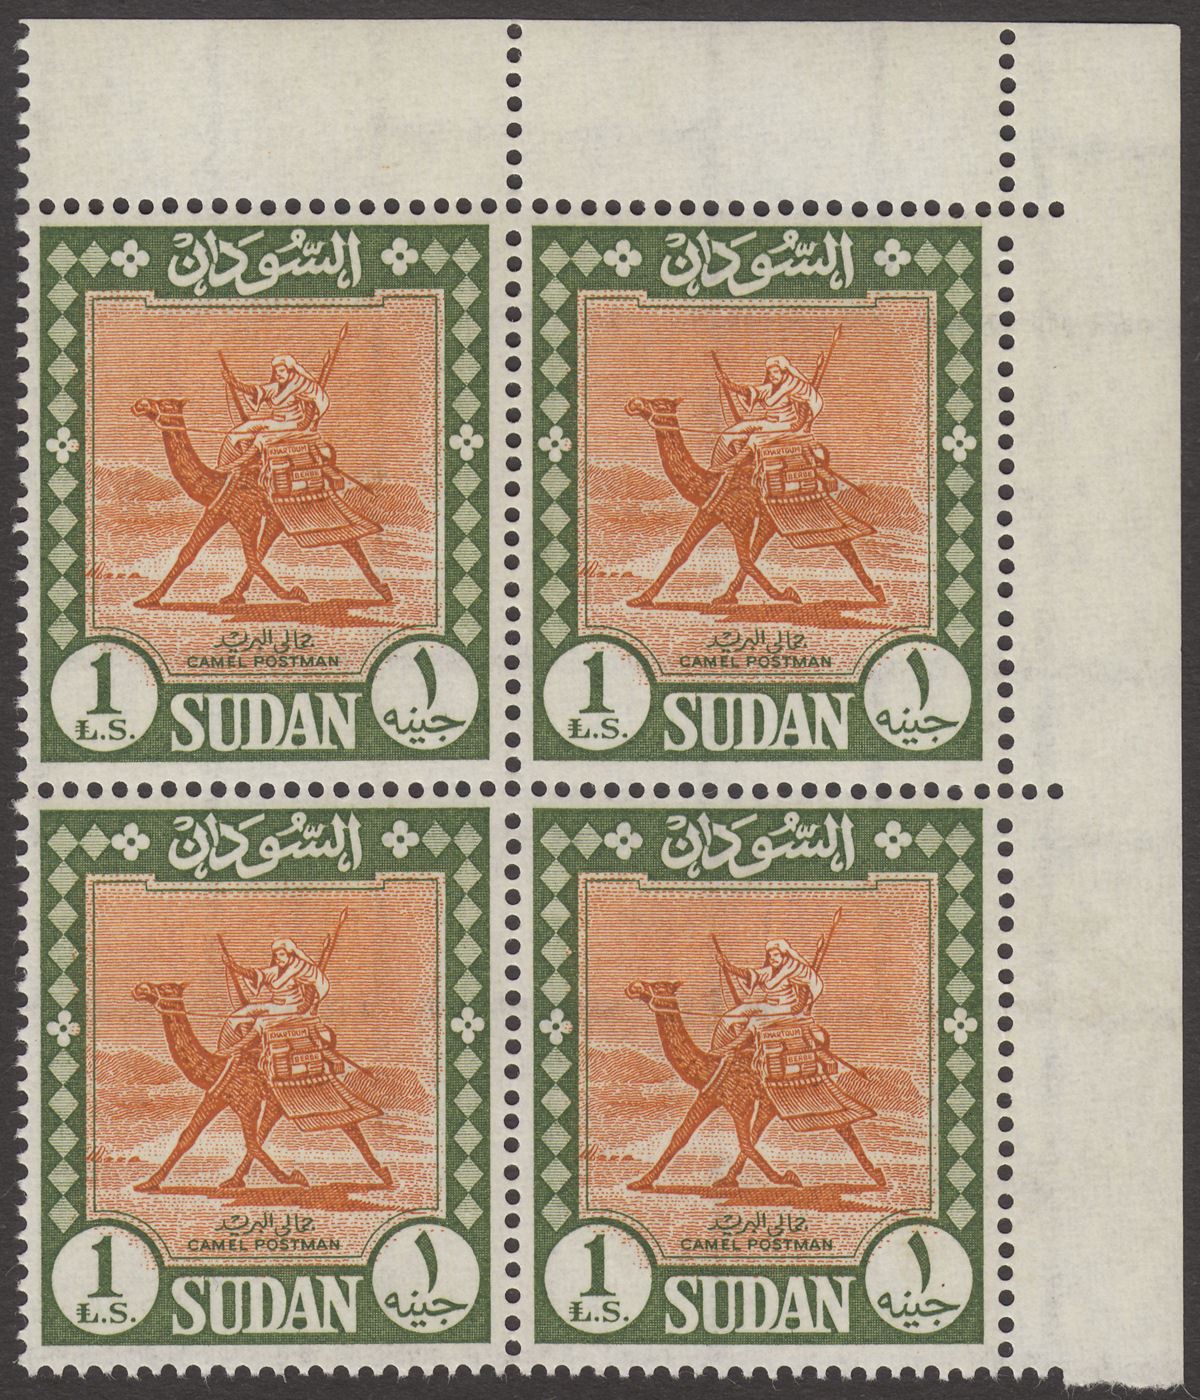 Sudan 1990 KGV Camel Postman £S1 Orange-Brn + Bronze Grn Block Mint SG469a c £68